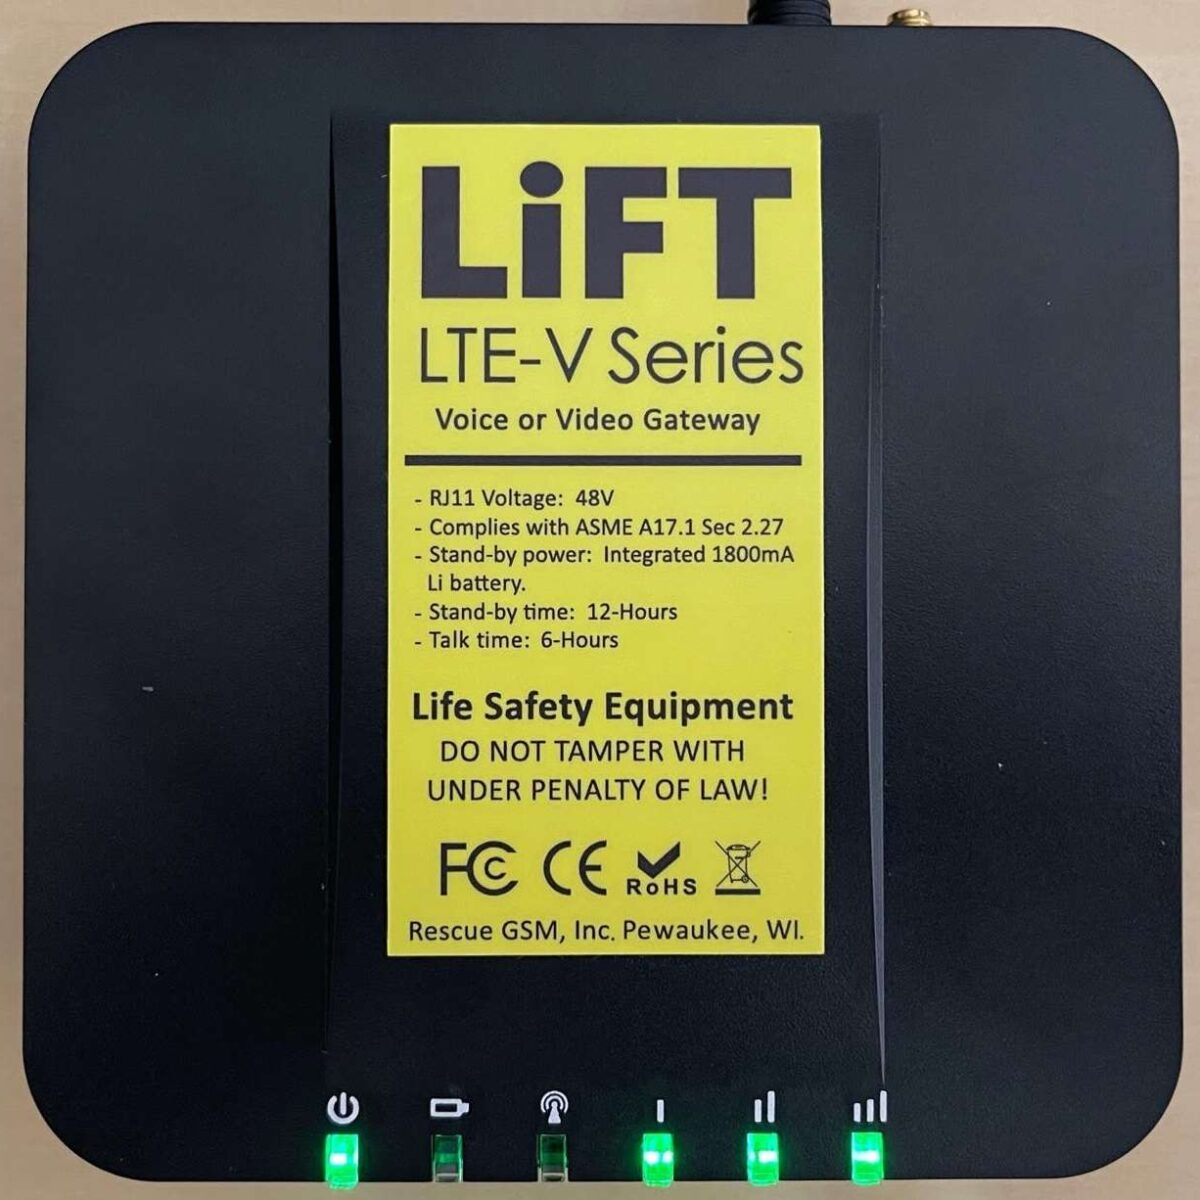 LIFT LTE-V Series Voice or Video Gateway